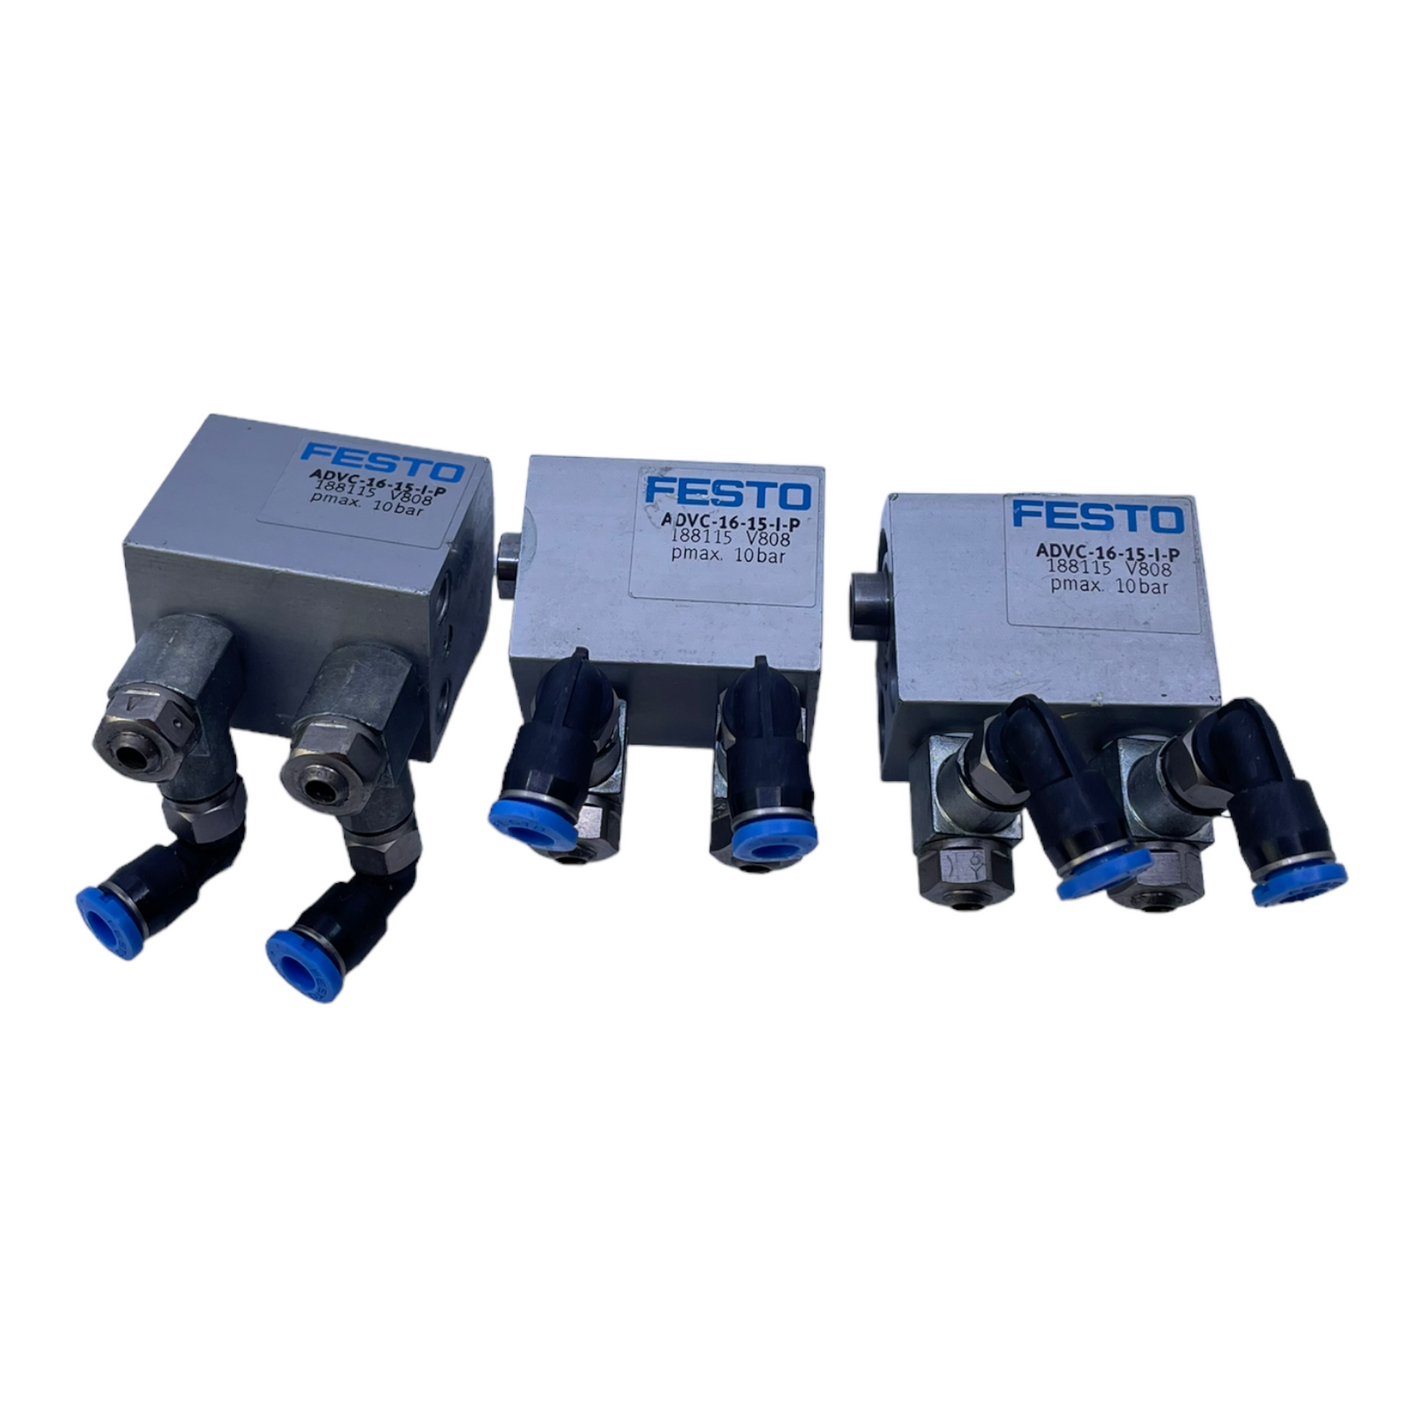 Festo ADVC-16-15-IP short stroke cylinder 18811 for industrial use 1-10bar PU:3pcs